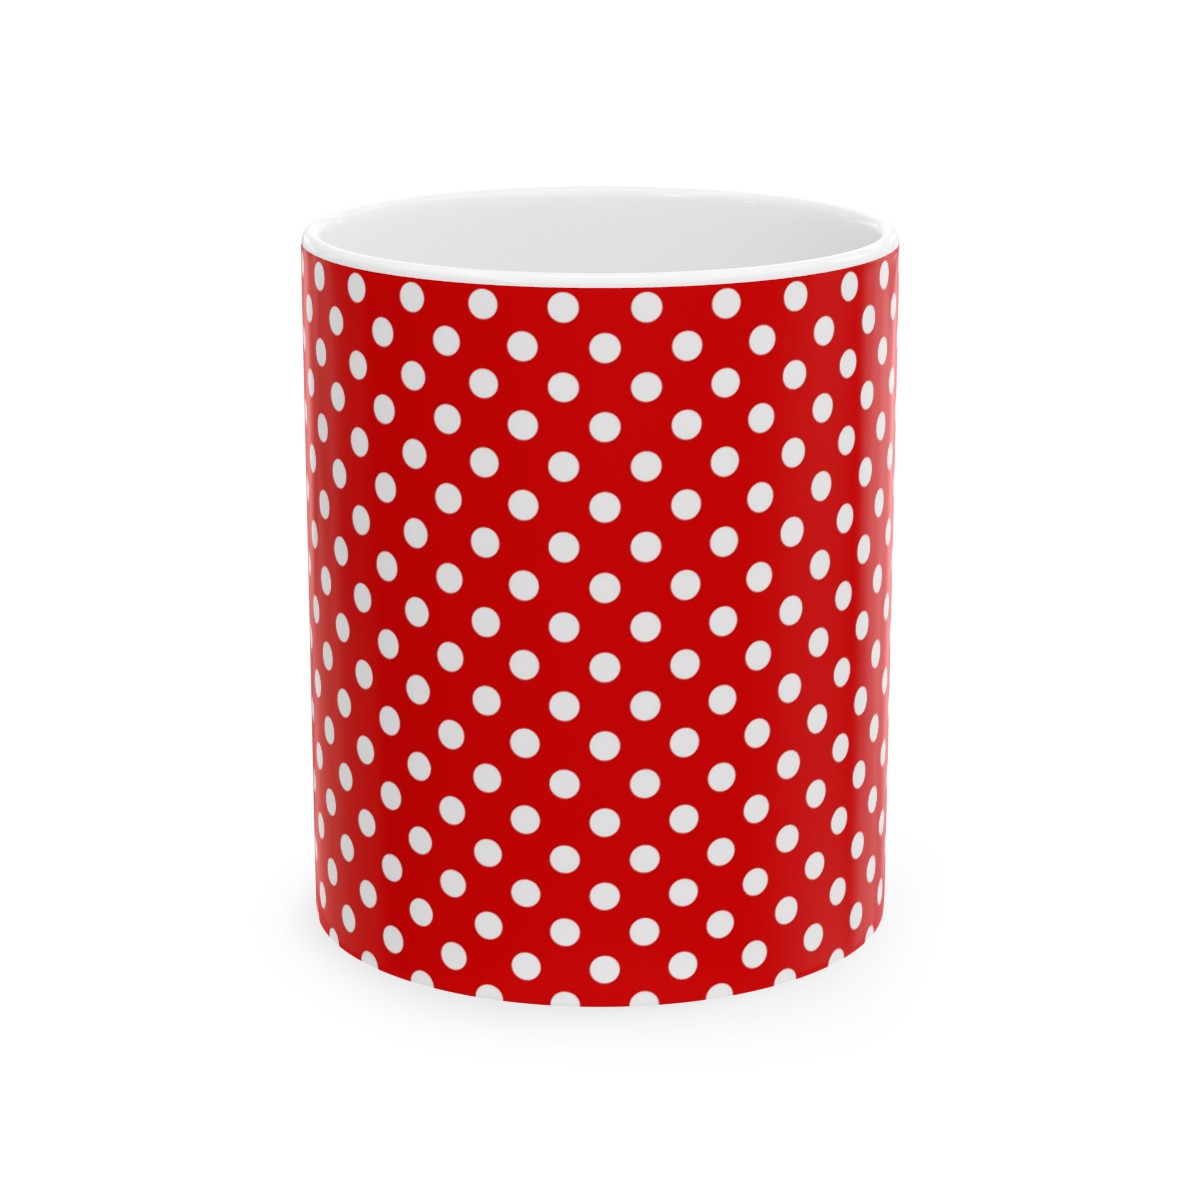 Ceramic Mug Red White Polka Dot product thumbnail image